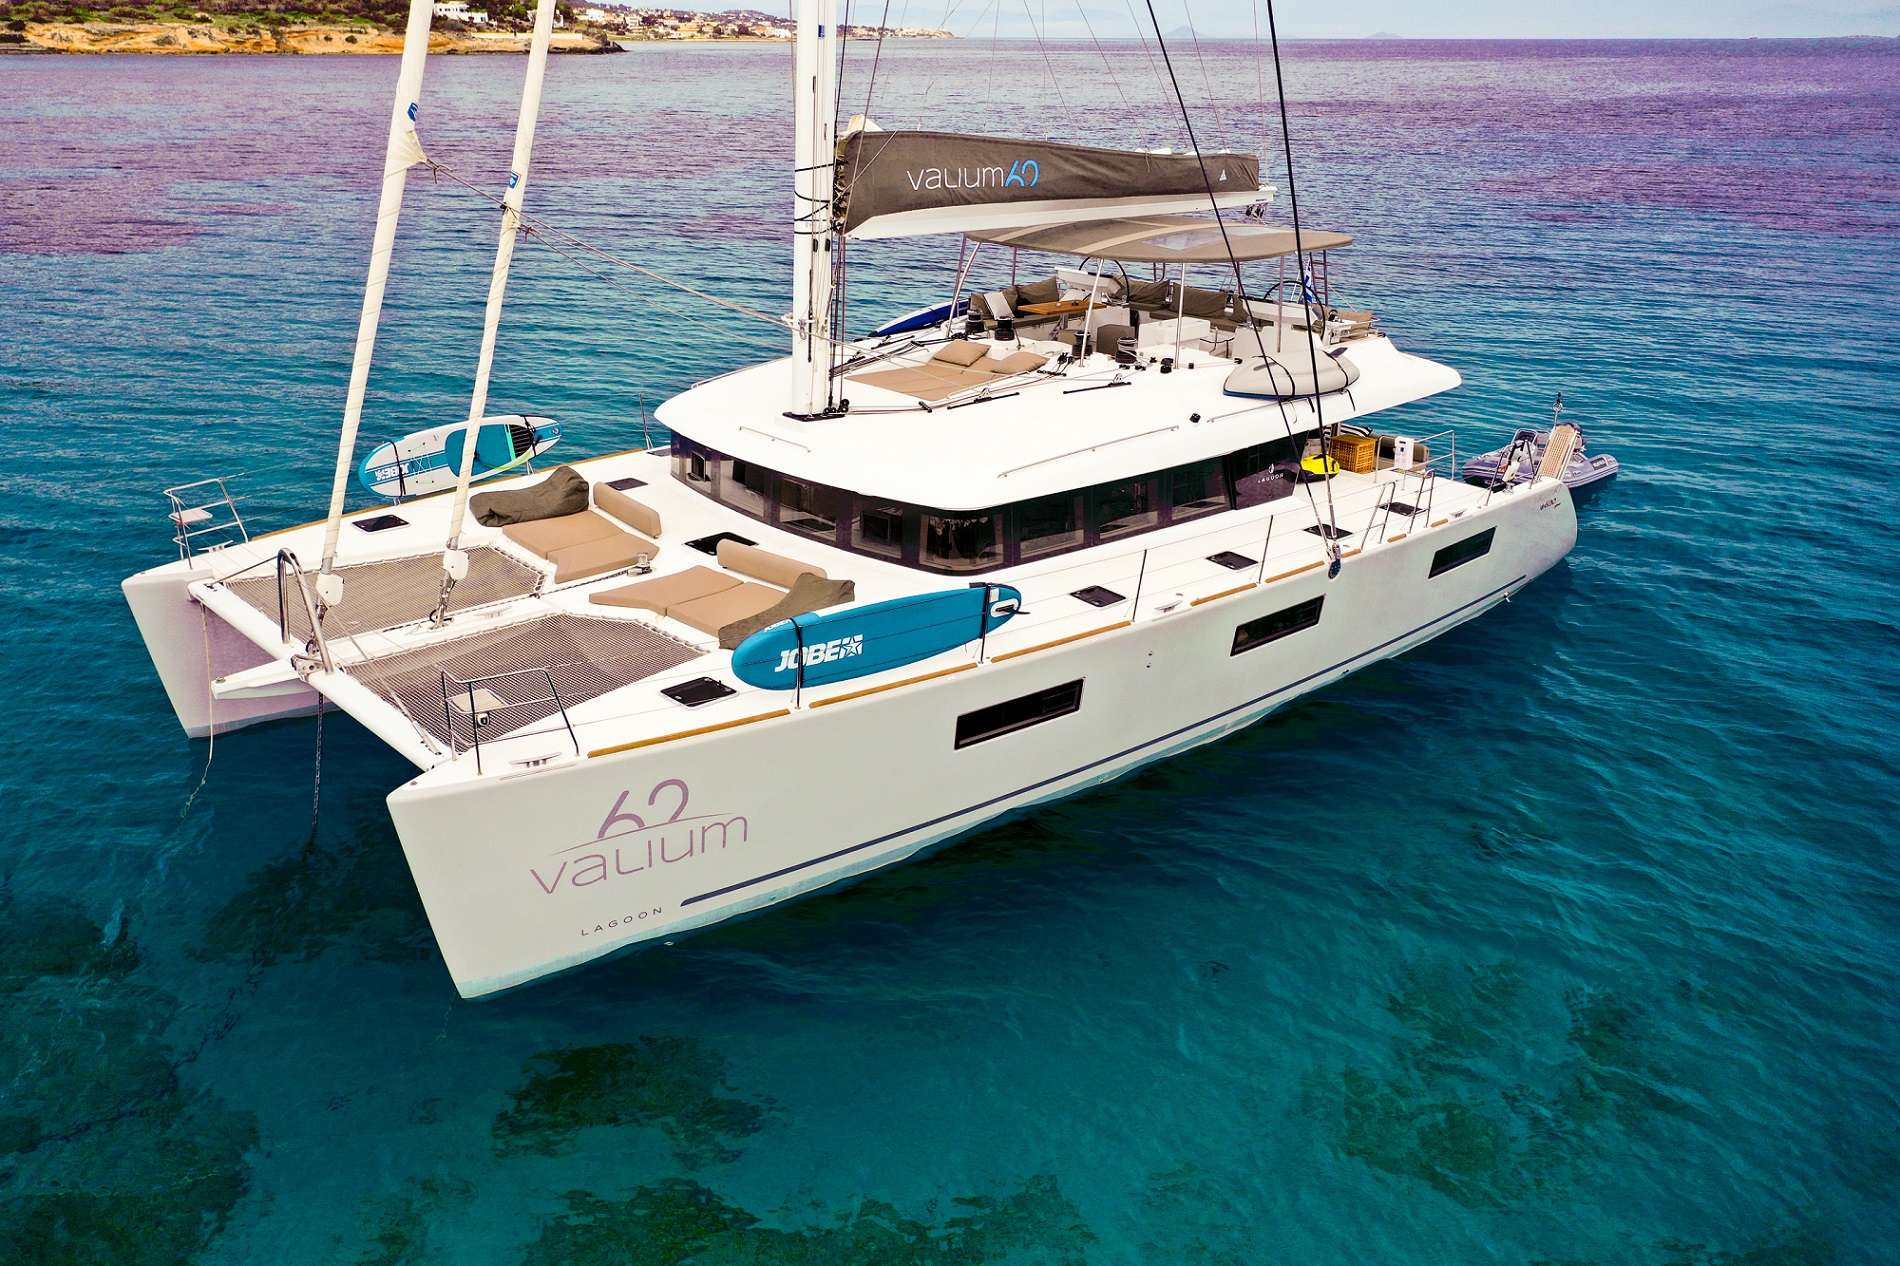 valium62 - Yacht Charter Neos Marmaras & Boat hire in Greece 2